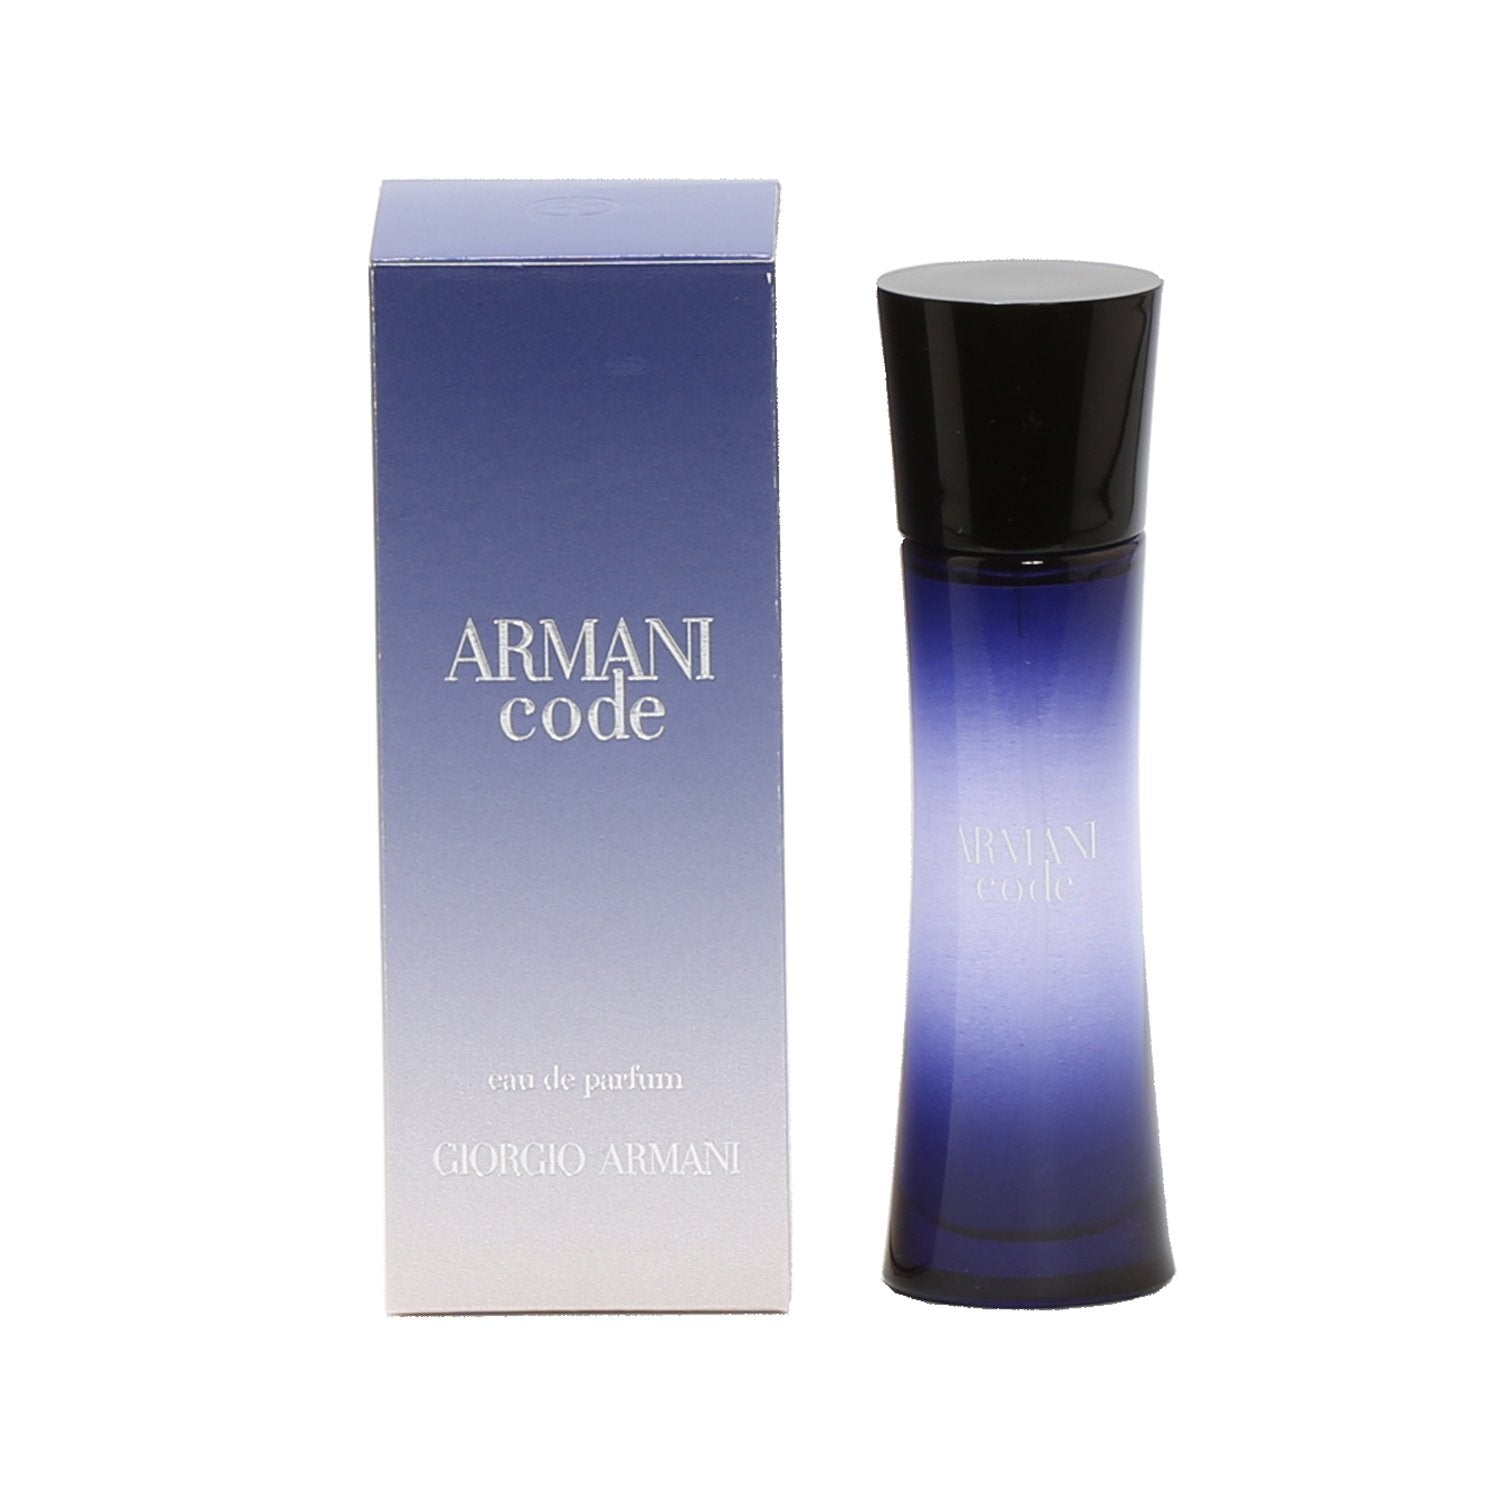 Perfume - ARMANI CODE FOR WOMEN BY GIORGIO ARMANI - EAU DE PARFUM SPRAY